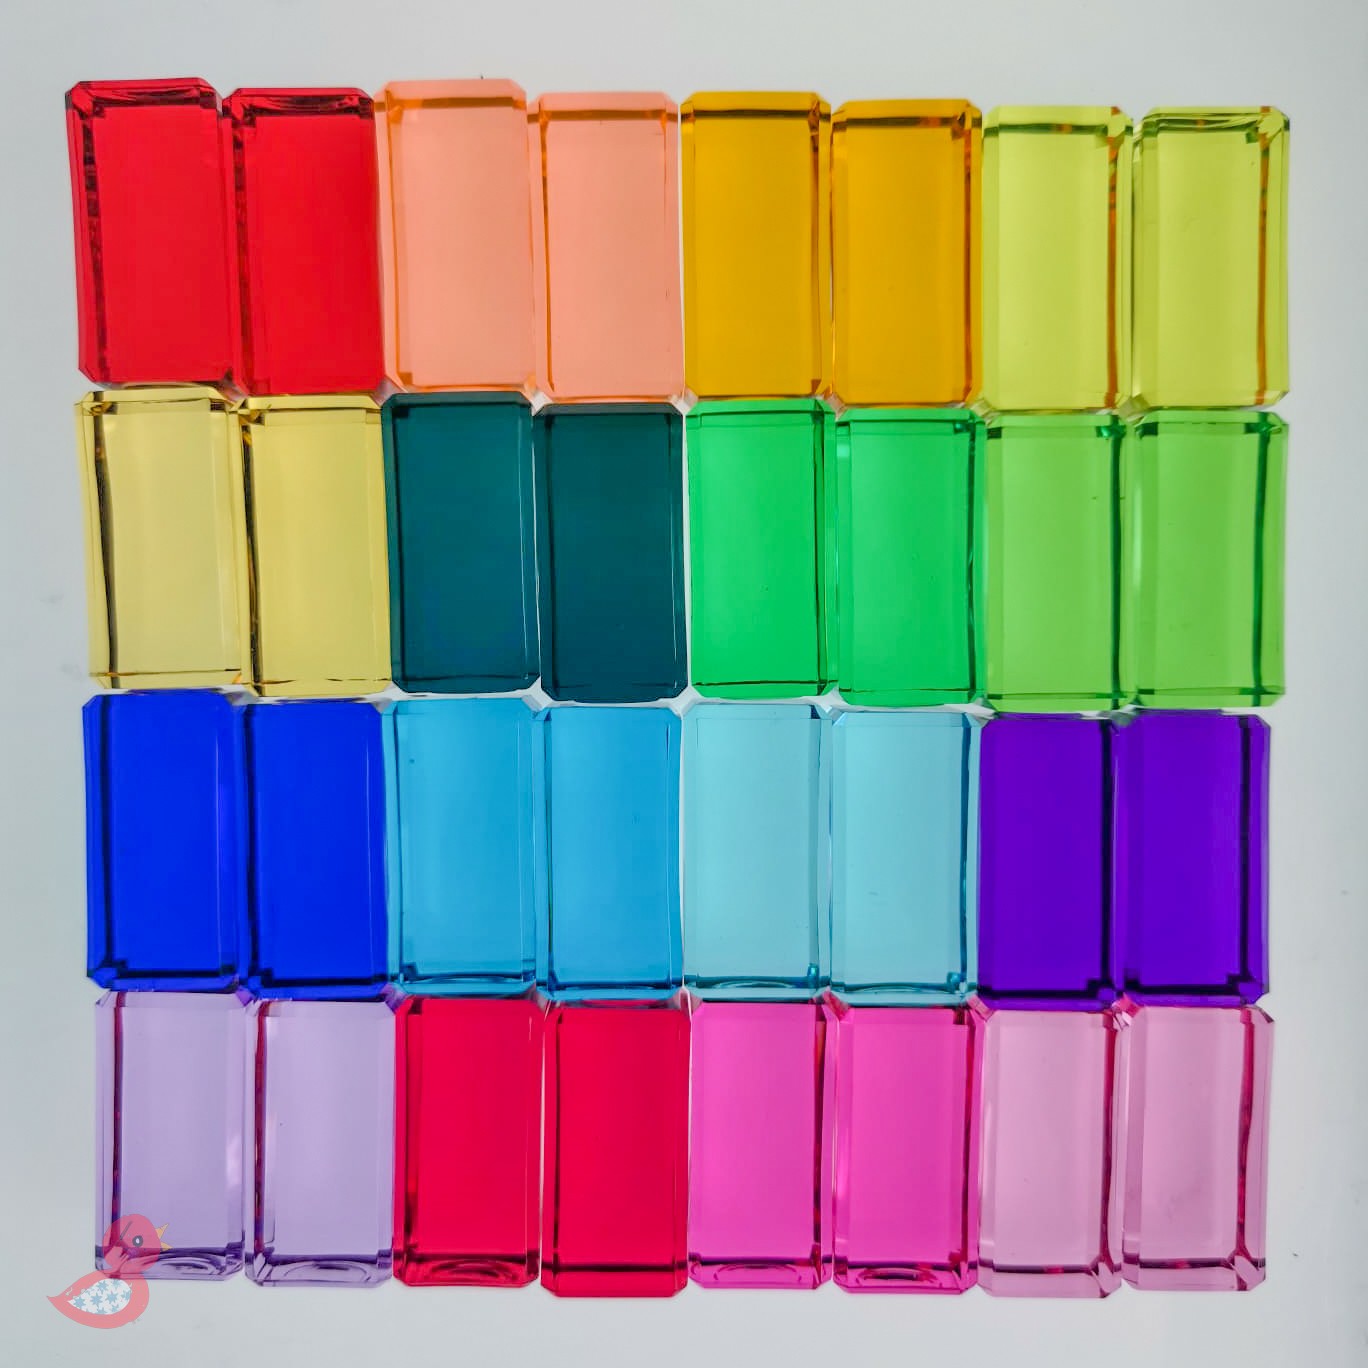 Translucent Rainbow Building Blocks - Set of 32 by Regenbogenland